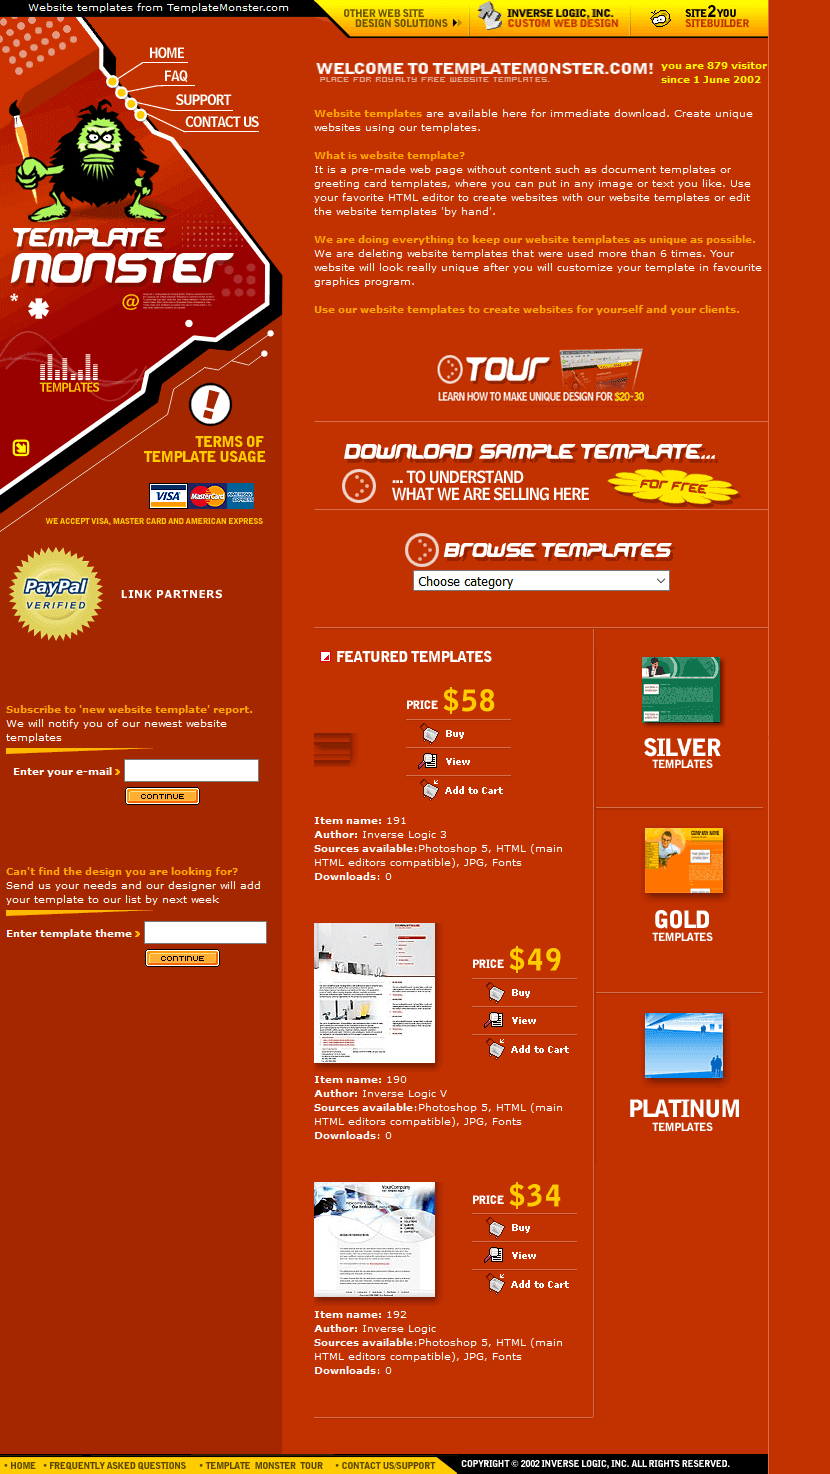 Template Monster website in 2002